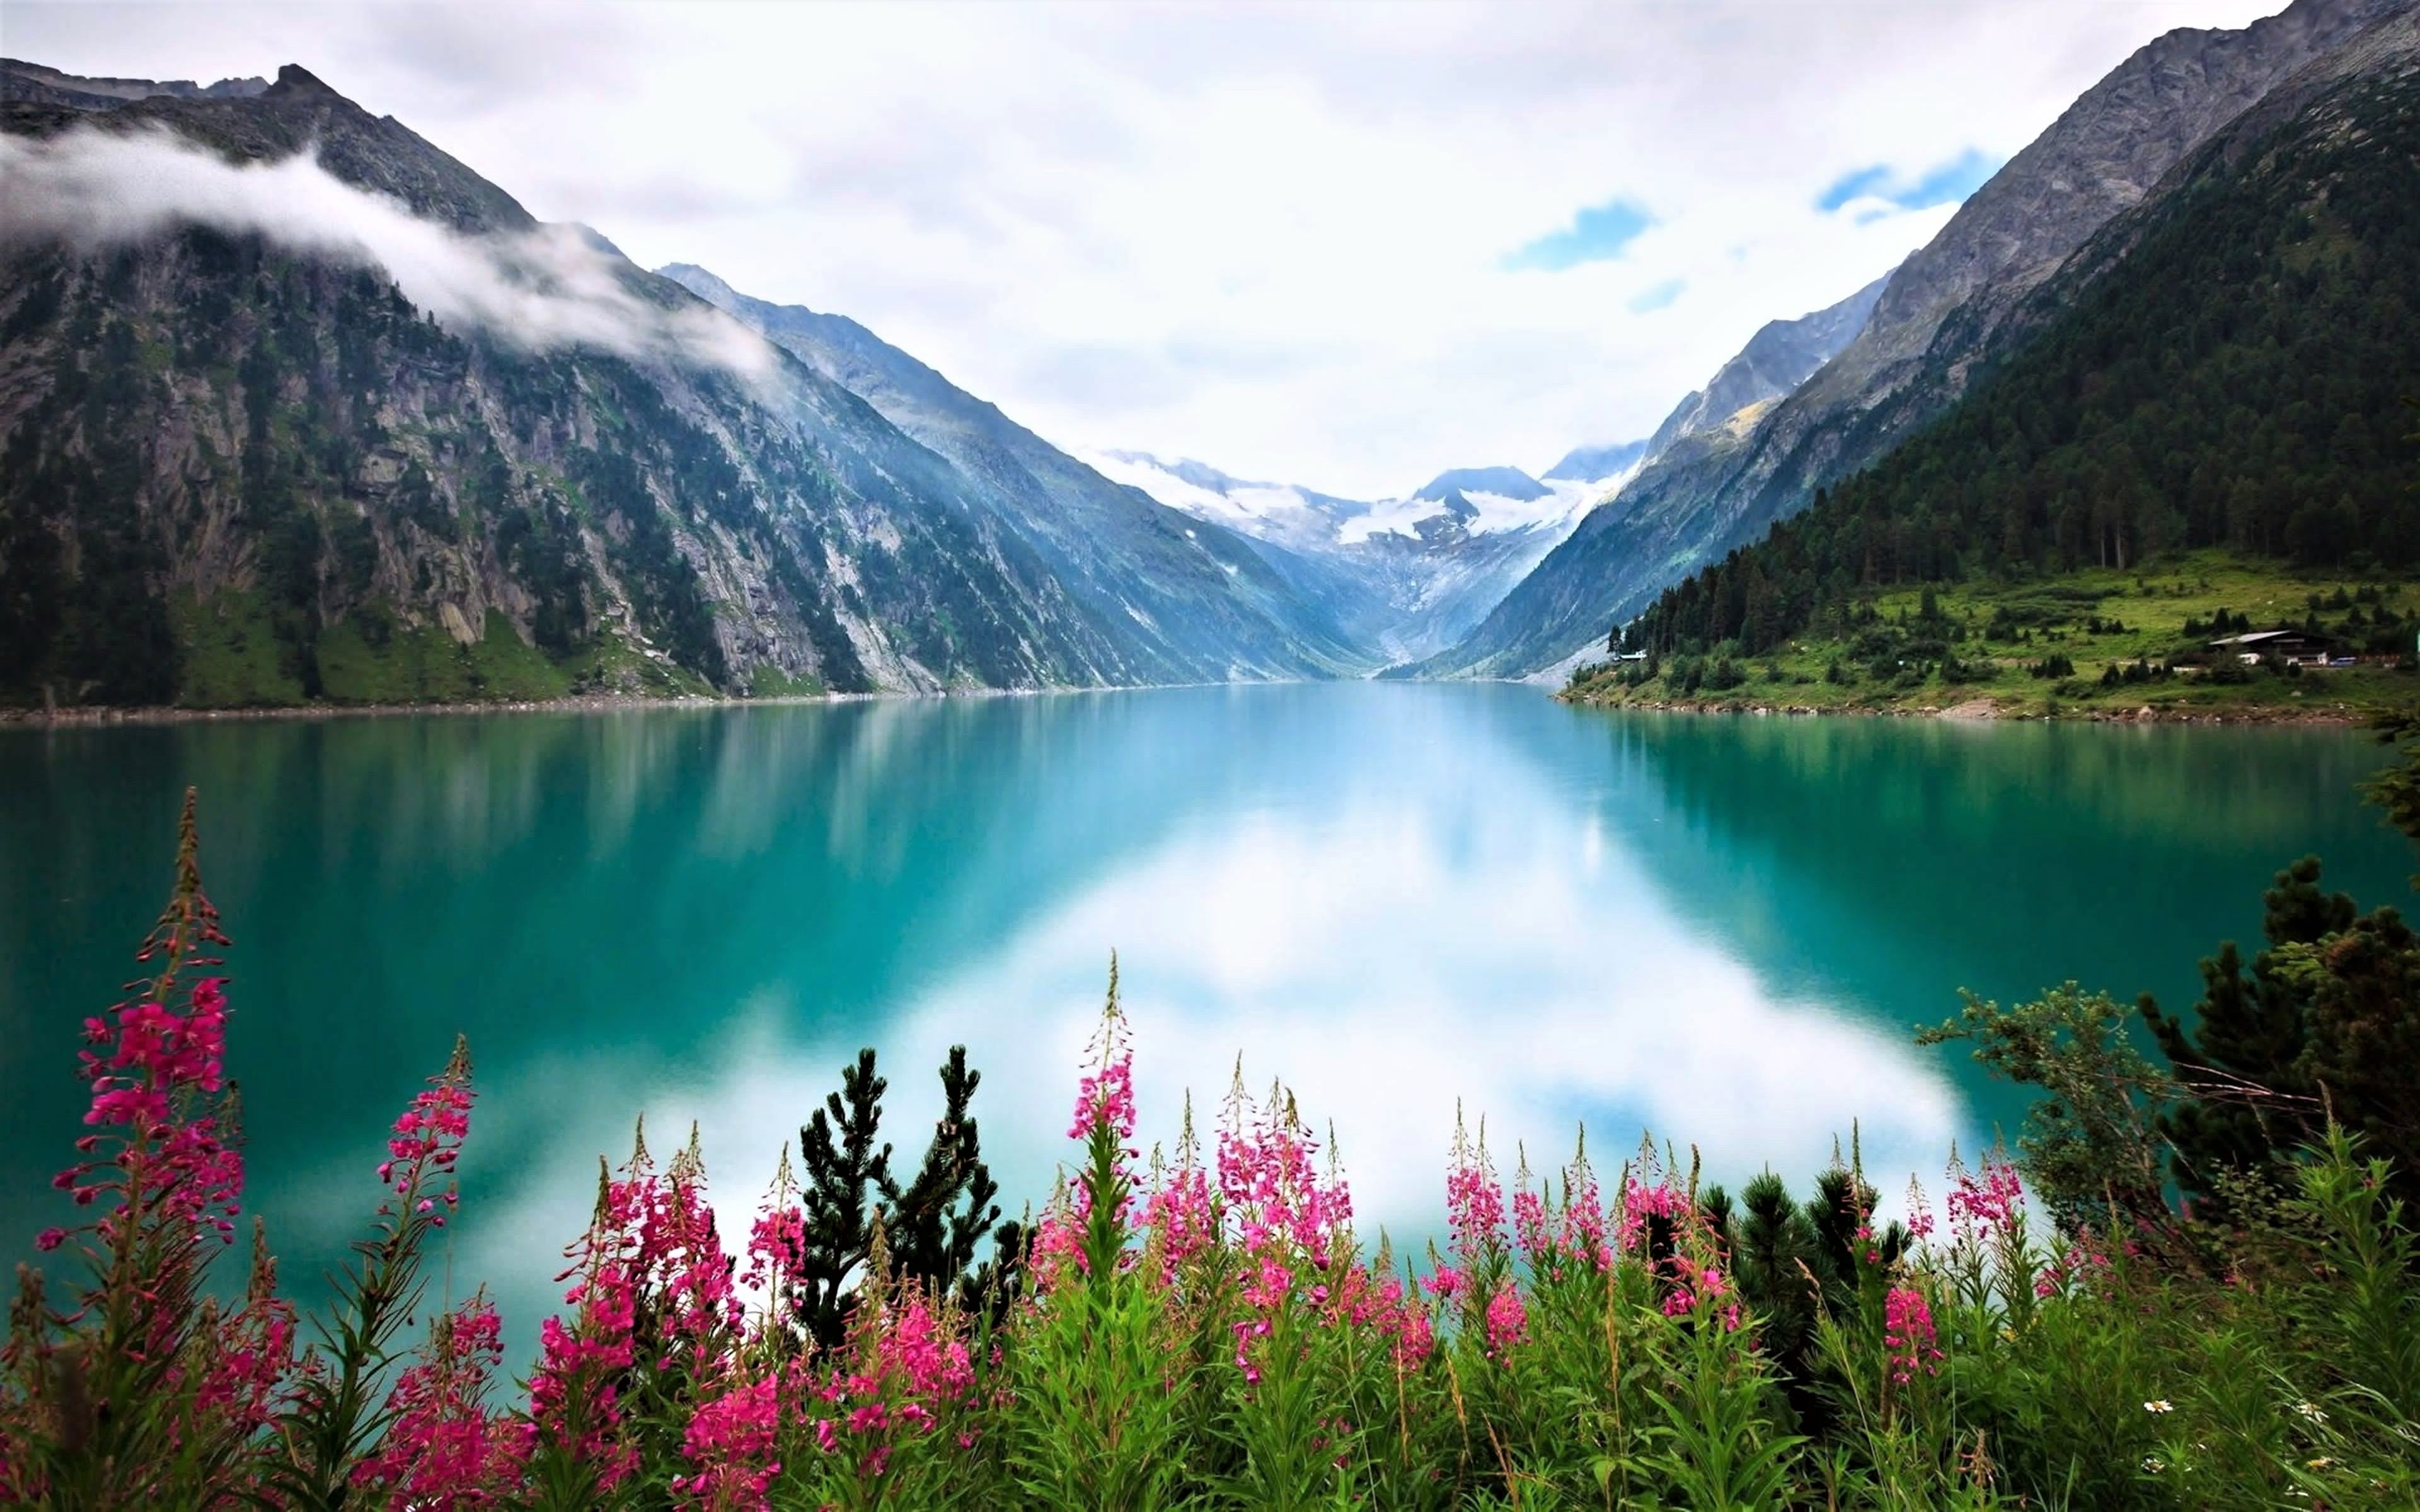 Картинка красивое озеро. Озеро Шлегайс Австрия. Озеро Элизабет Австрия. Швейцария манзаралари. Долина Циллерталь озеро.